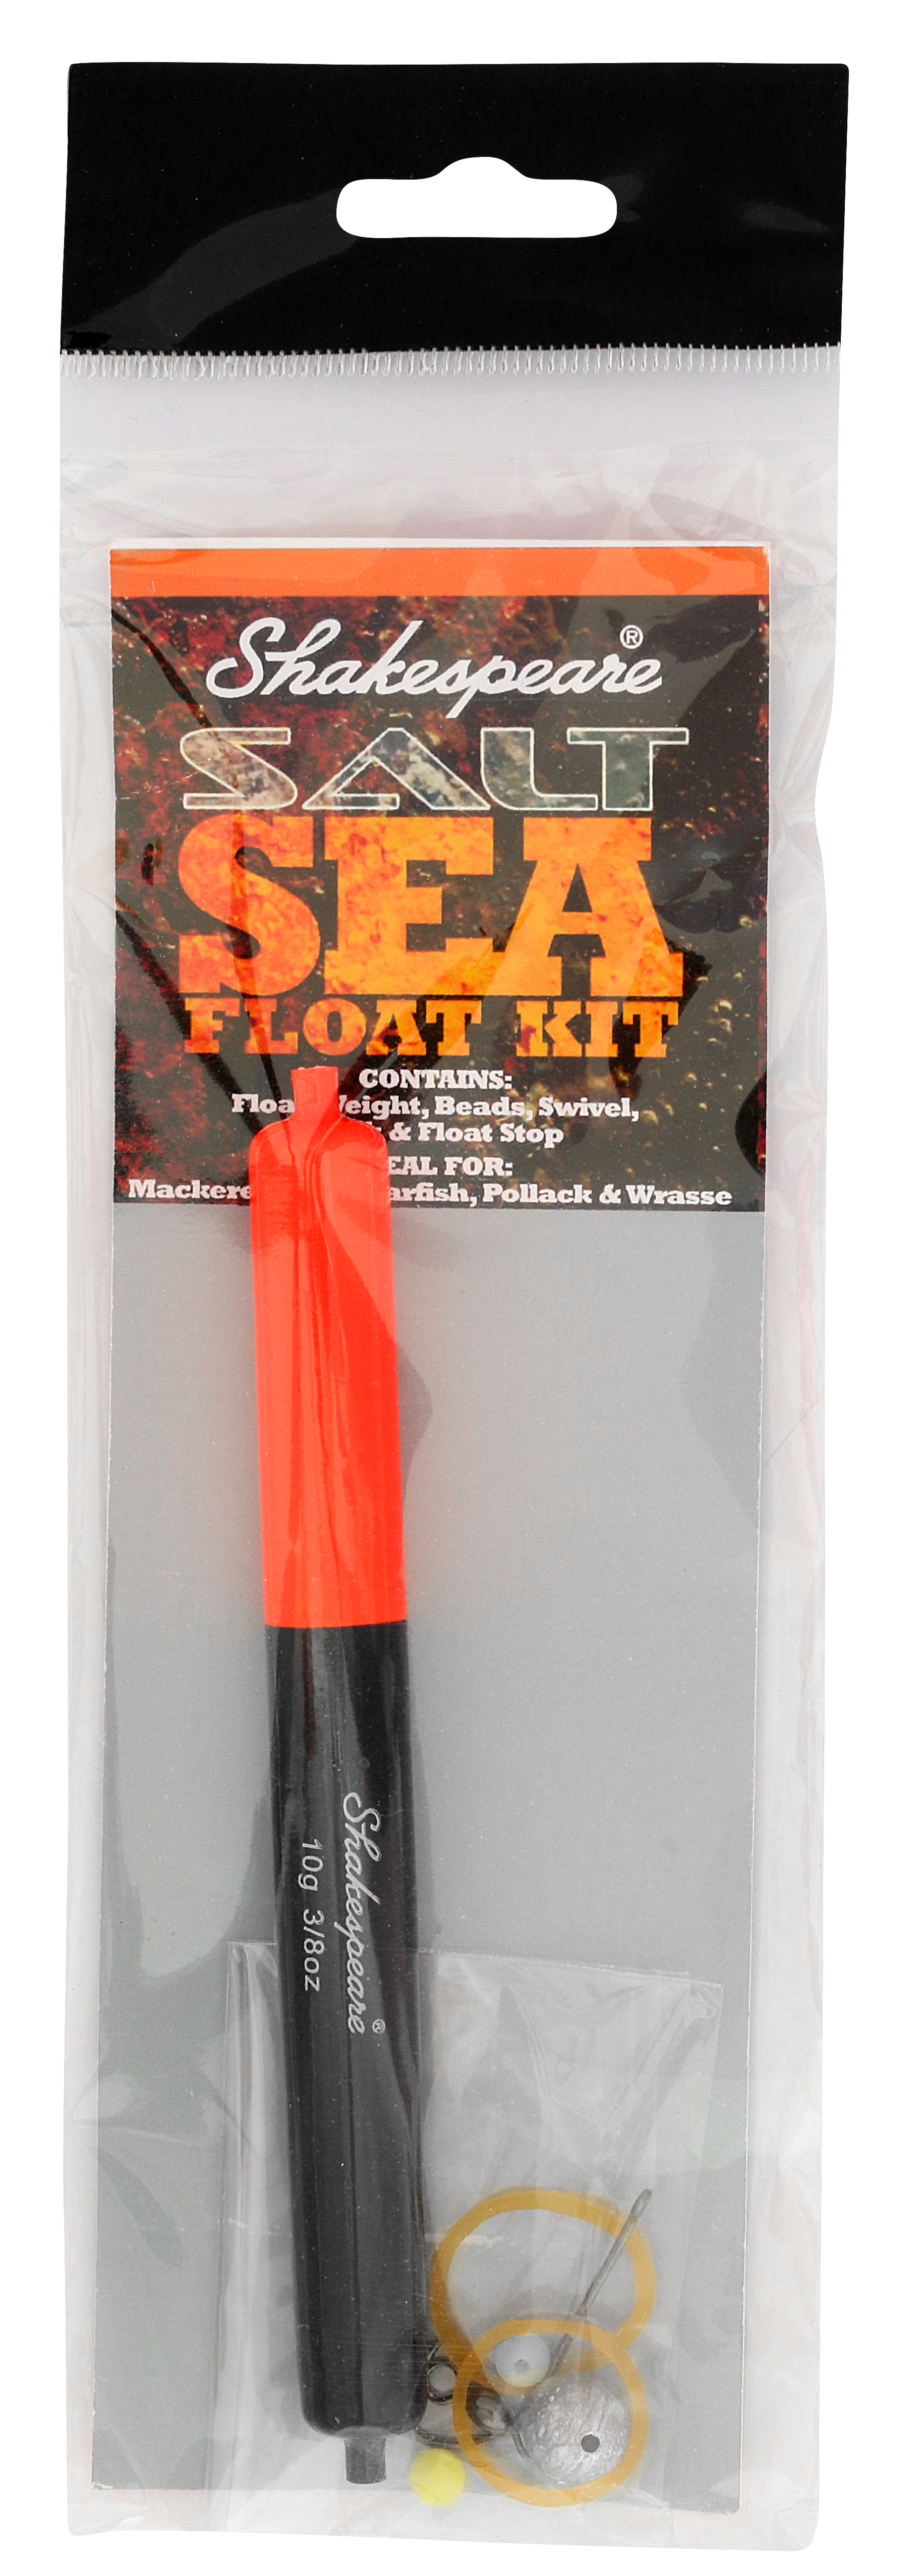 Shakespeare Salt XT Float Kit All Sizes Available Sea Fishing Floats 